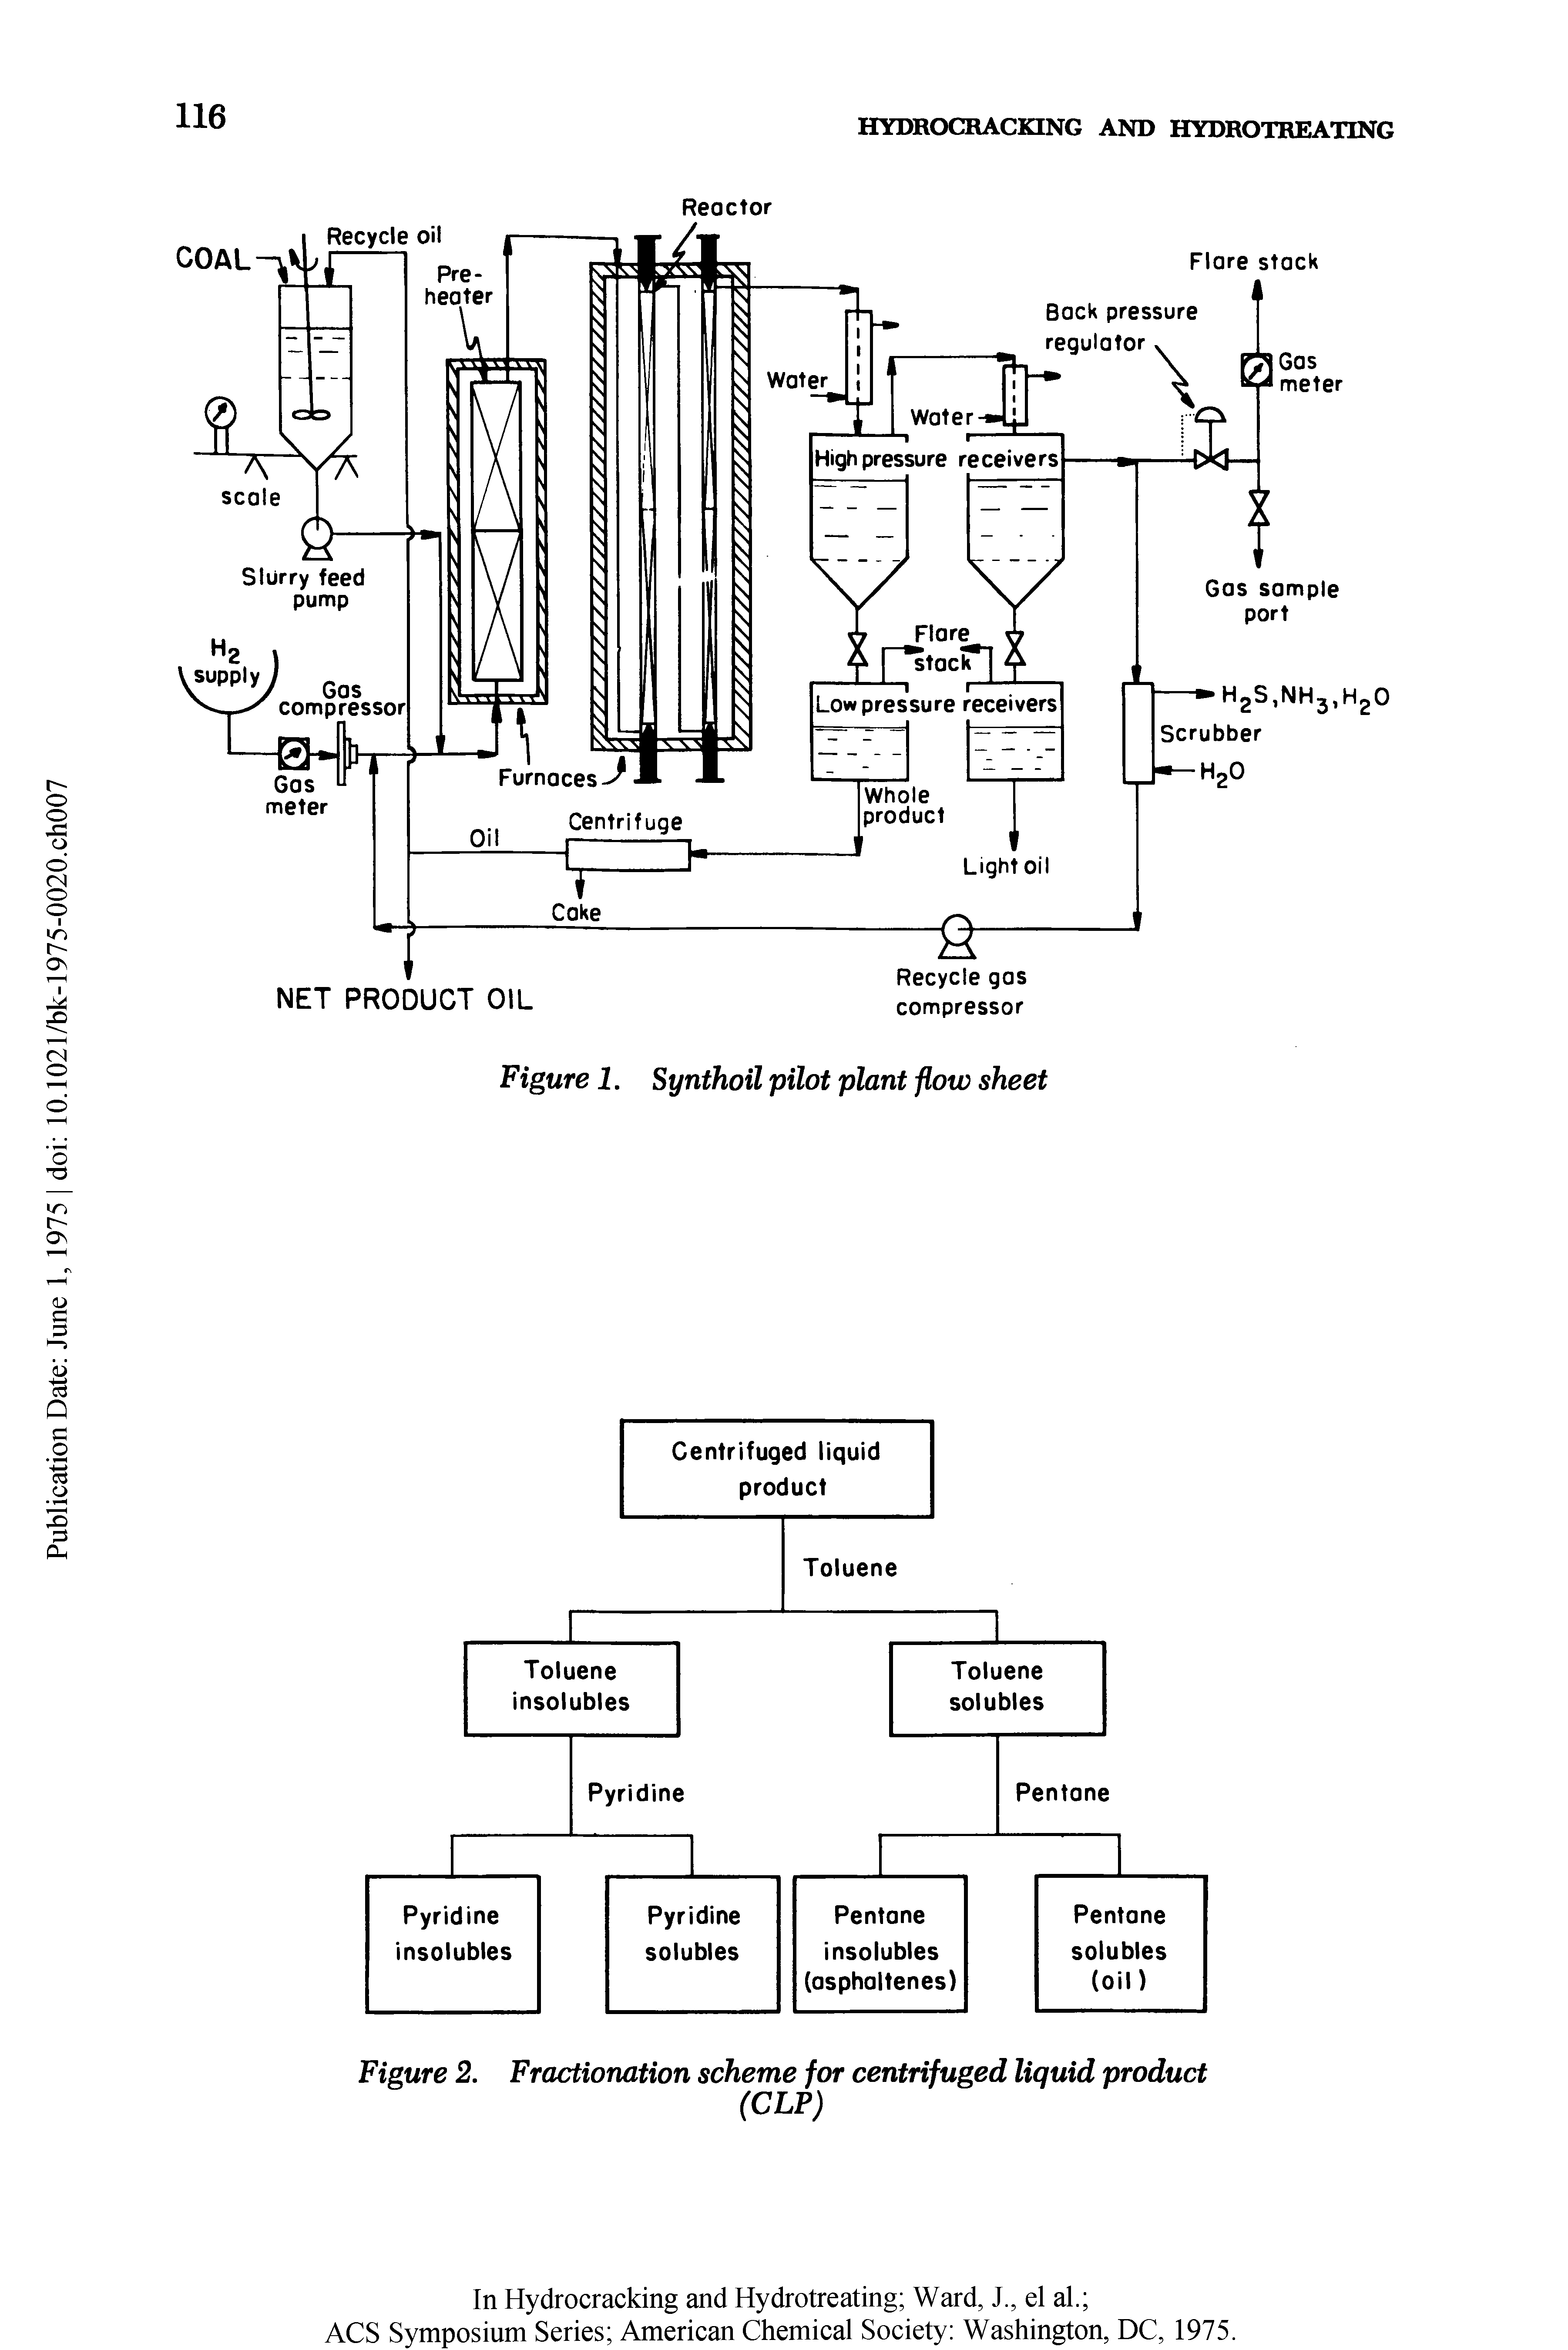 Figure 2. Fractionation scheme for centrifuged liquid product (CLP)...